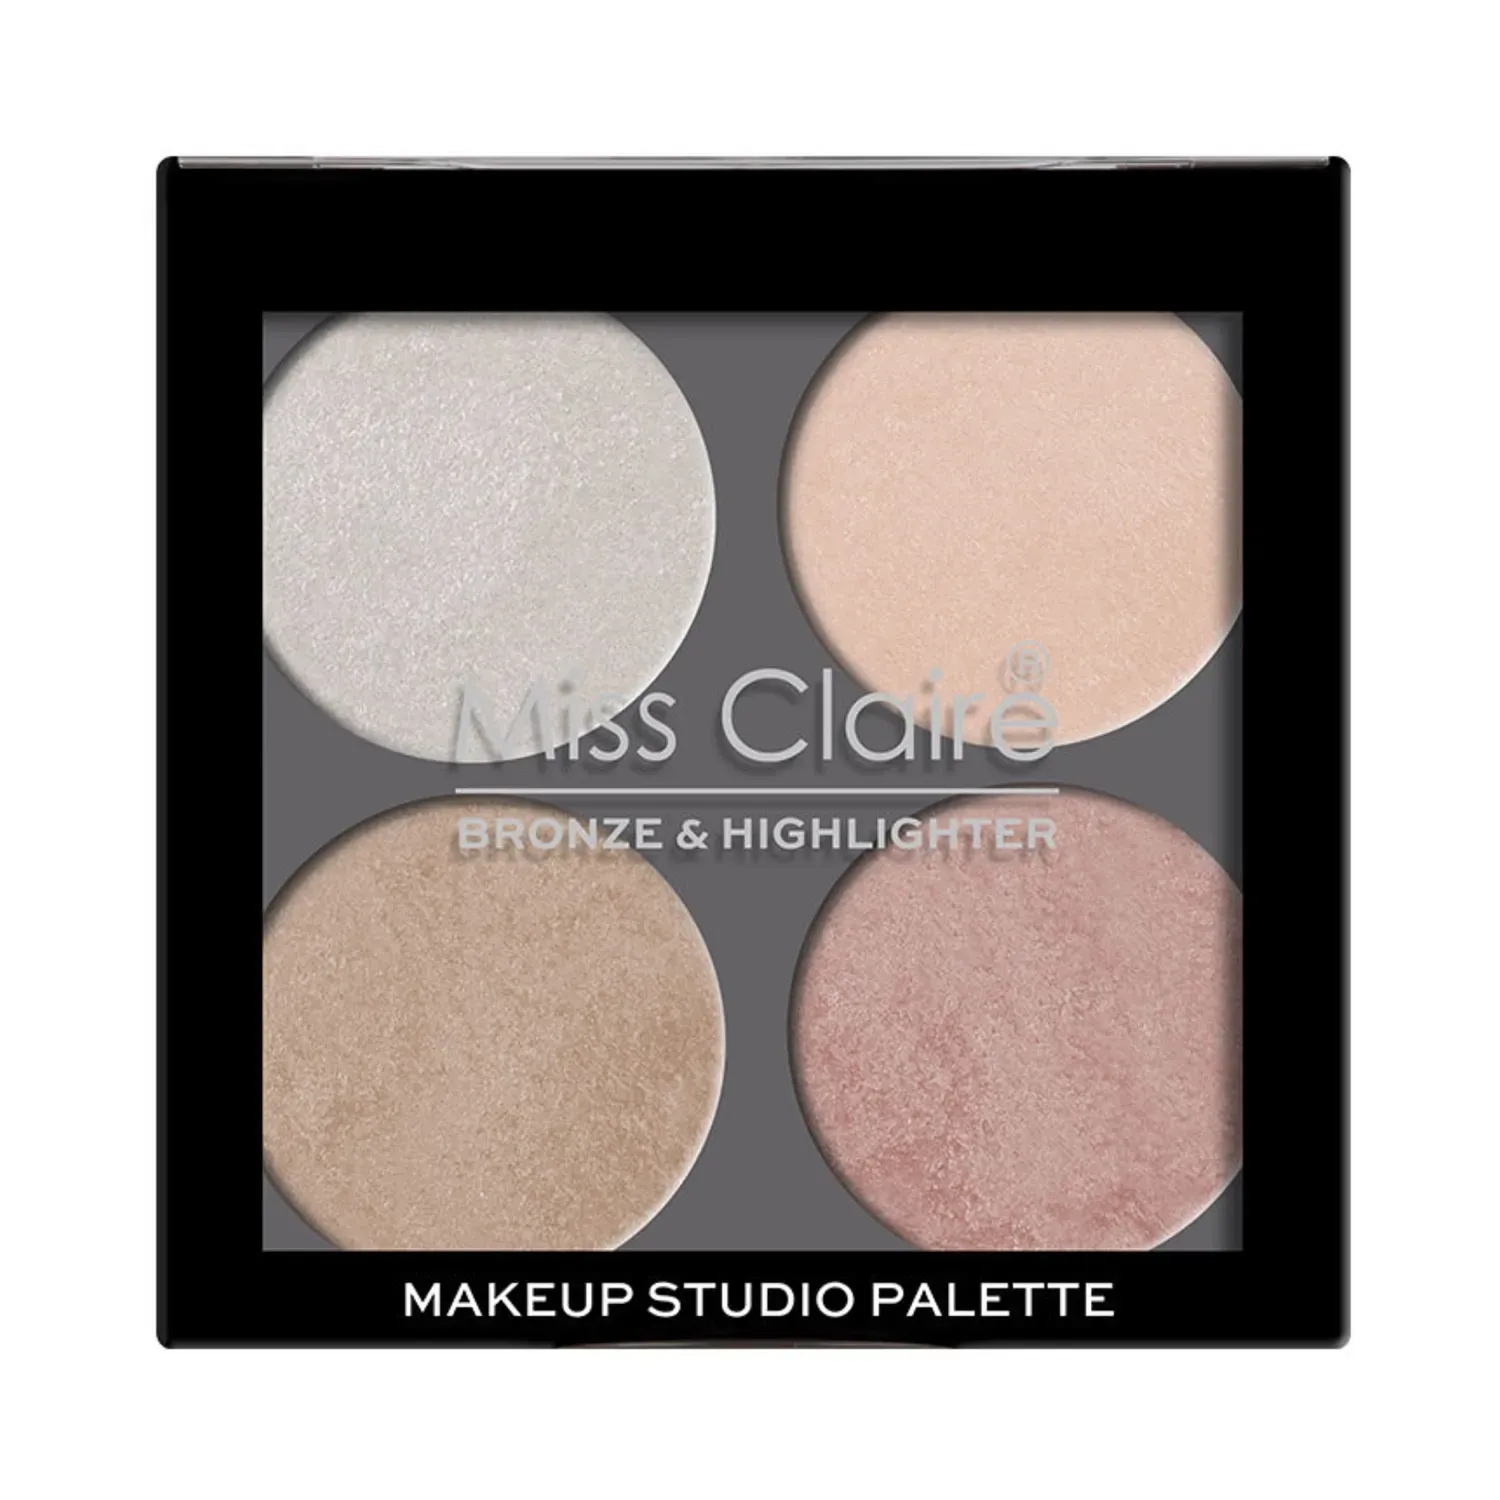 Miss Claire Bronze & Highlighter Makeup Studio Palette - 2 (8g)